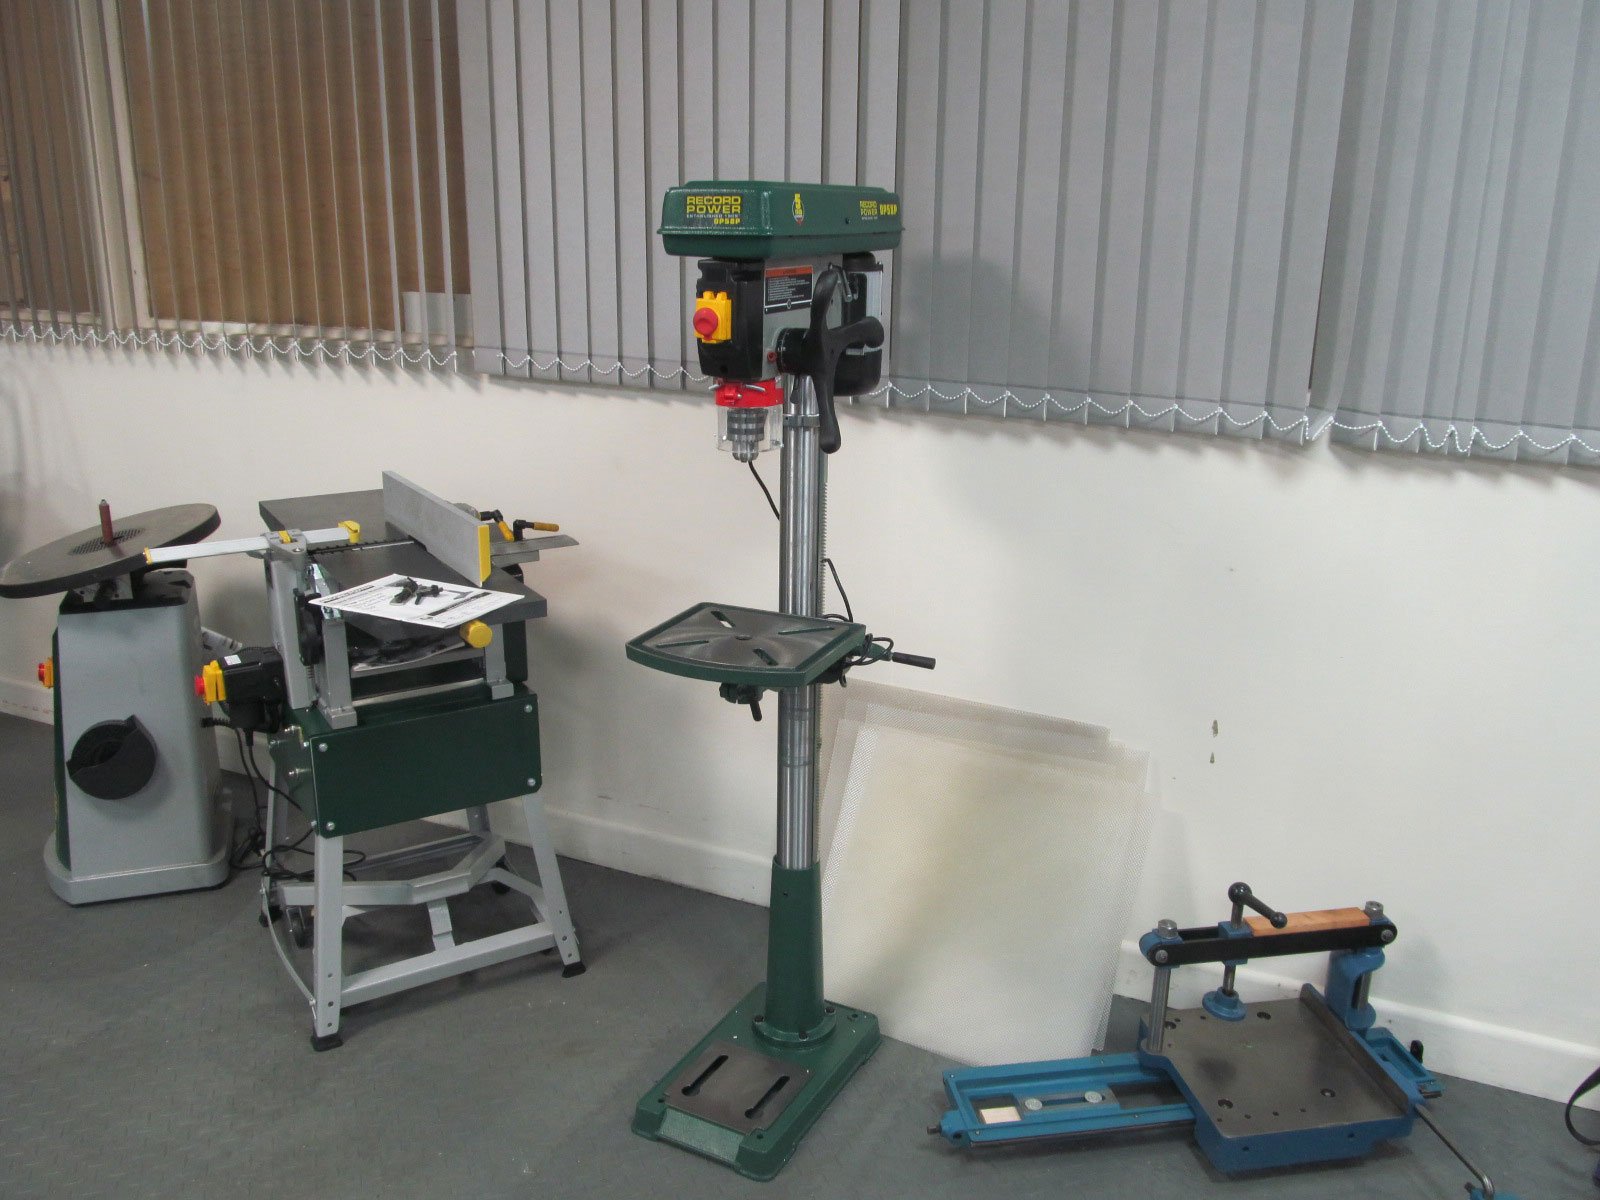 Floor model drill presses